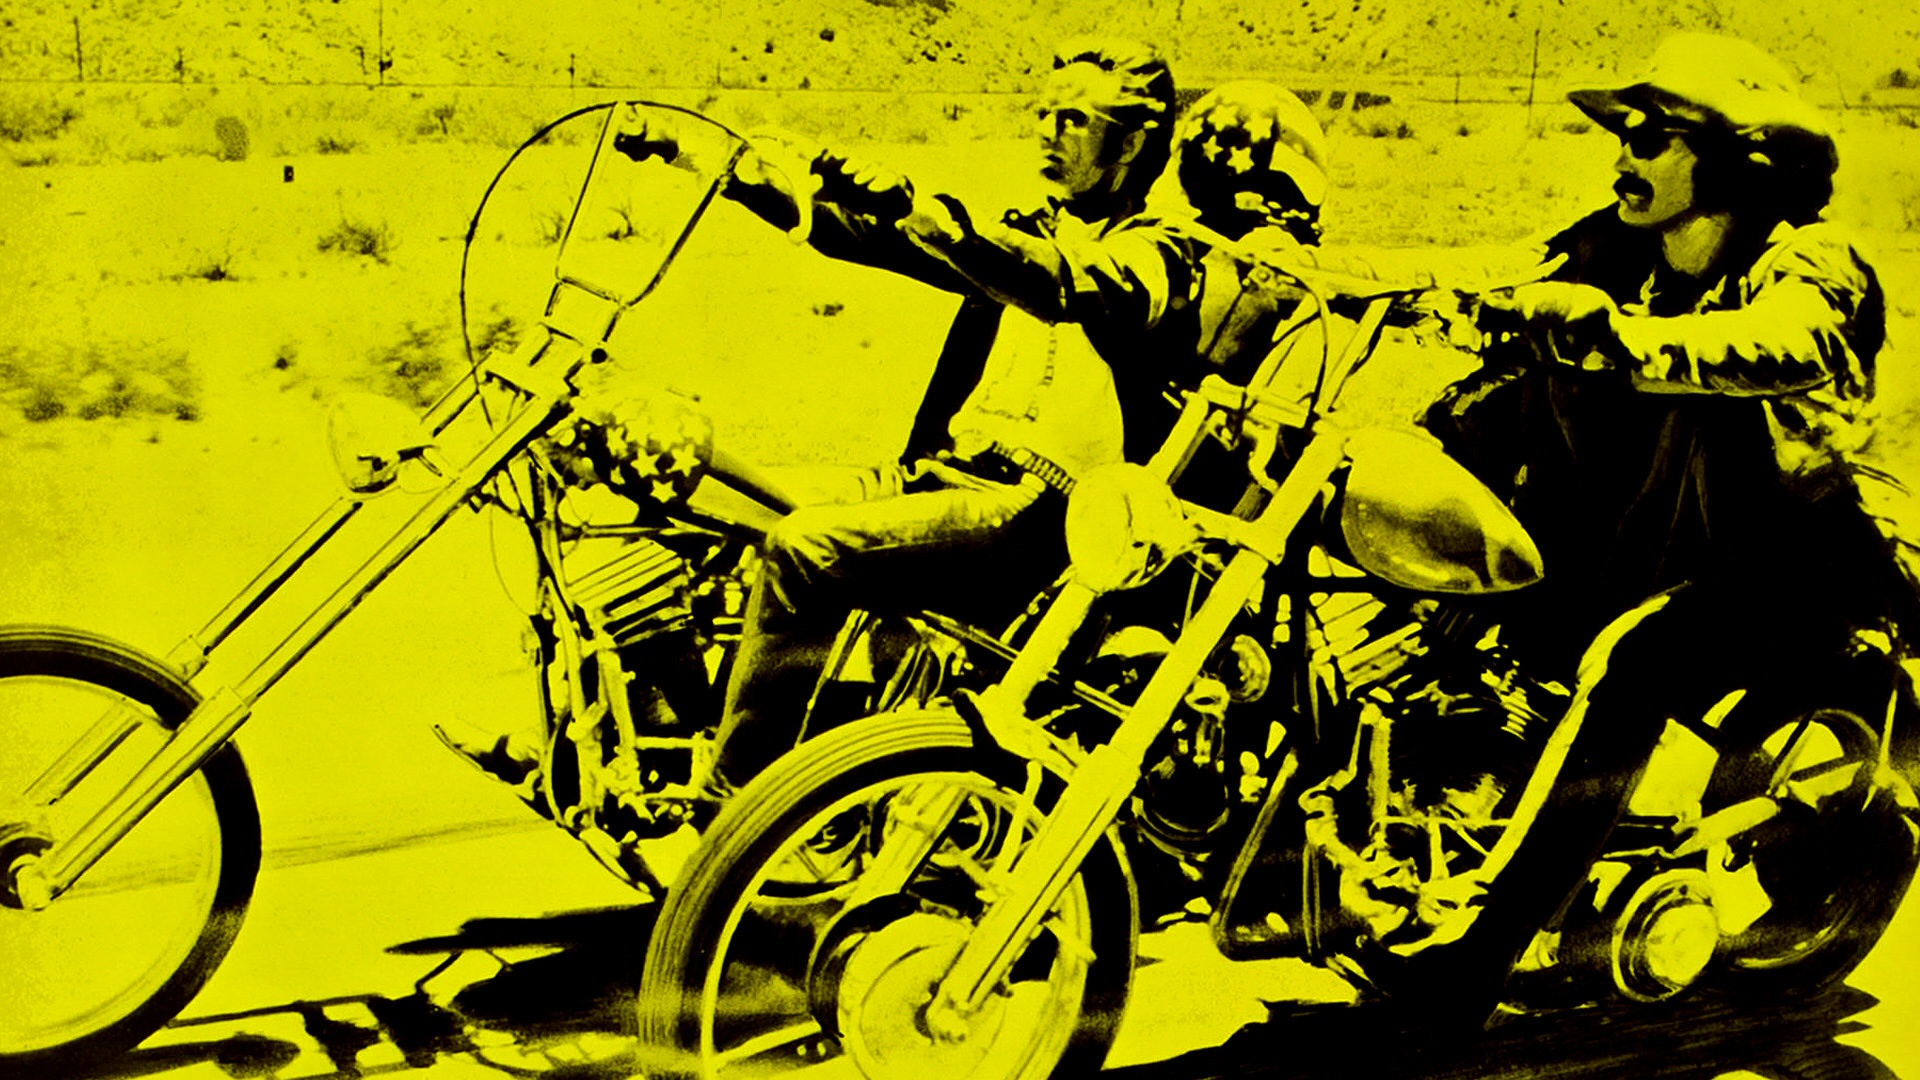 Download Easy Rider actors movie photos 1920x1080 HD Wallpaper and